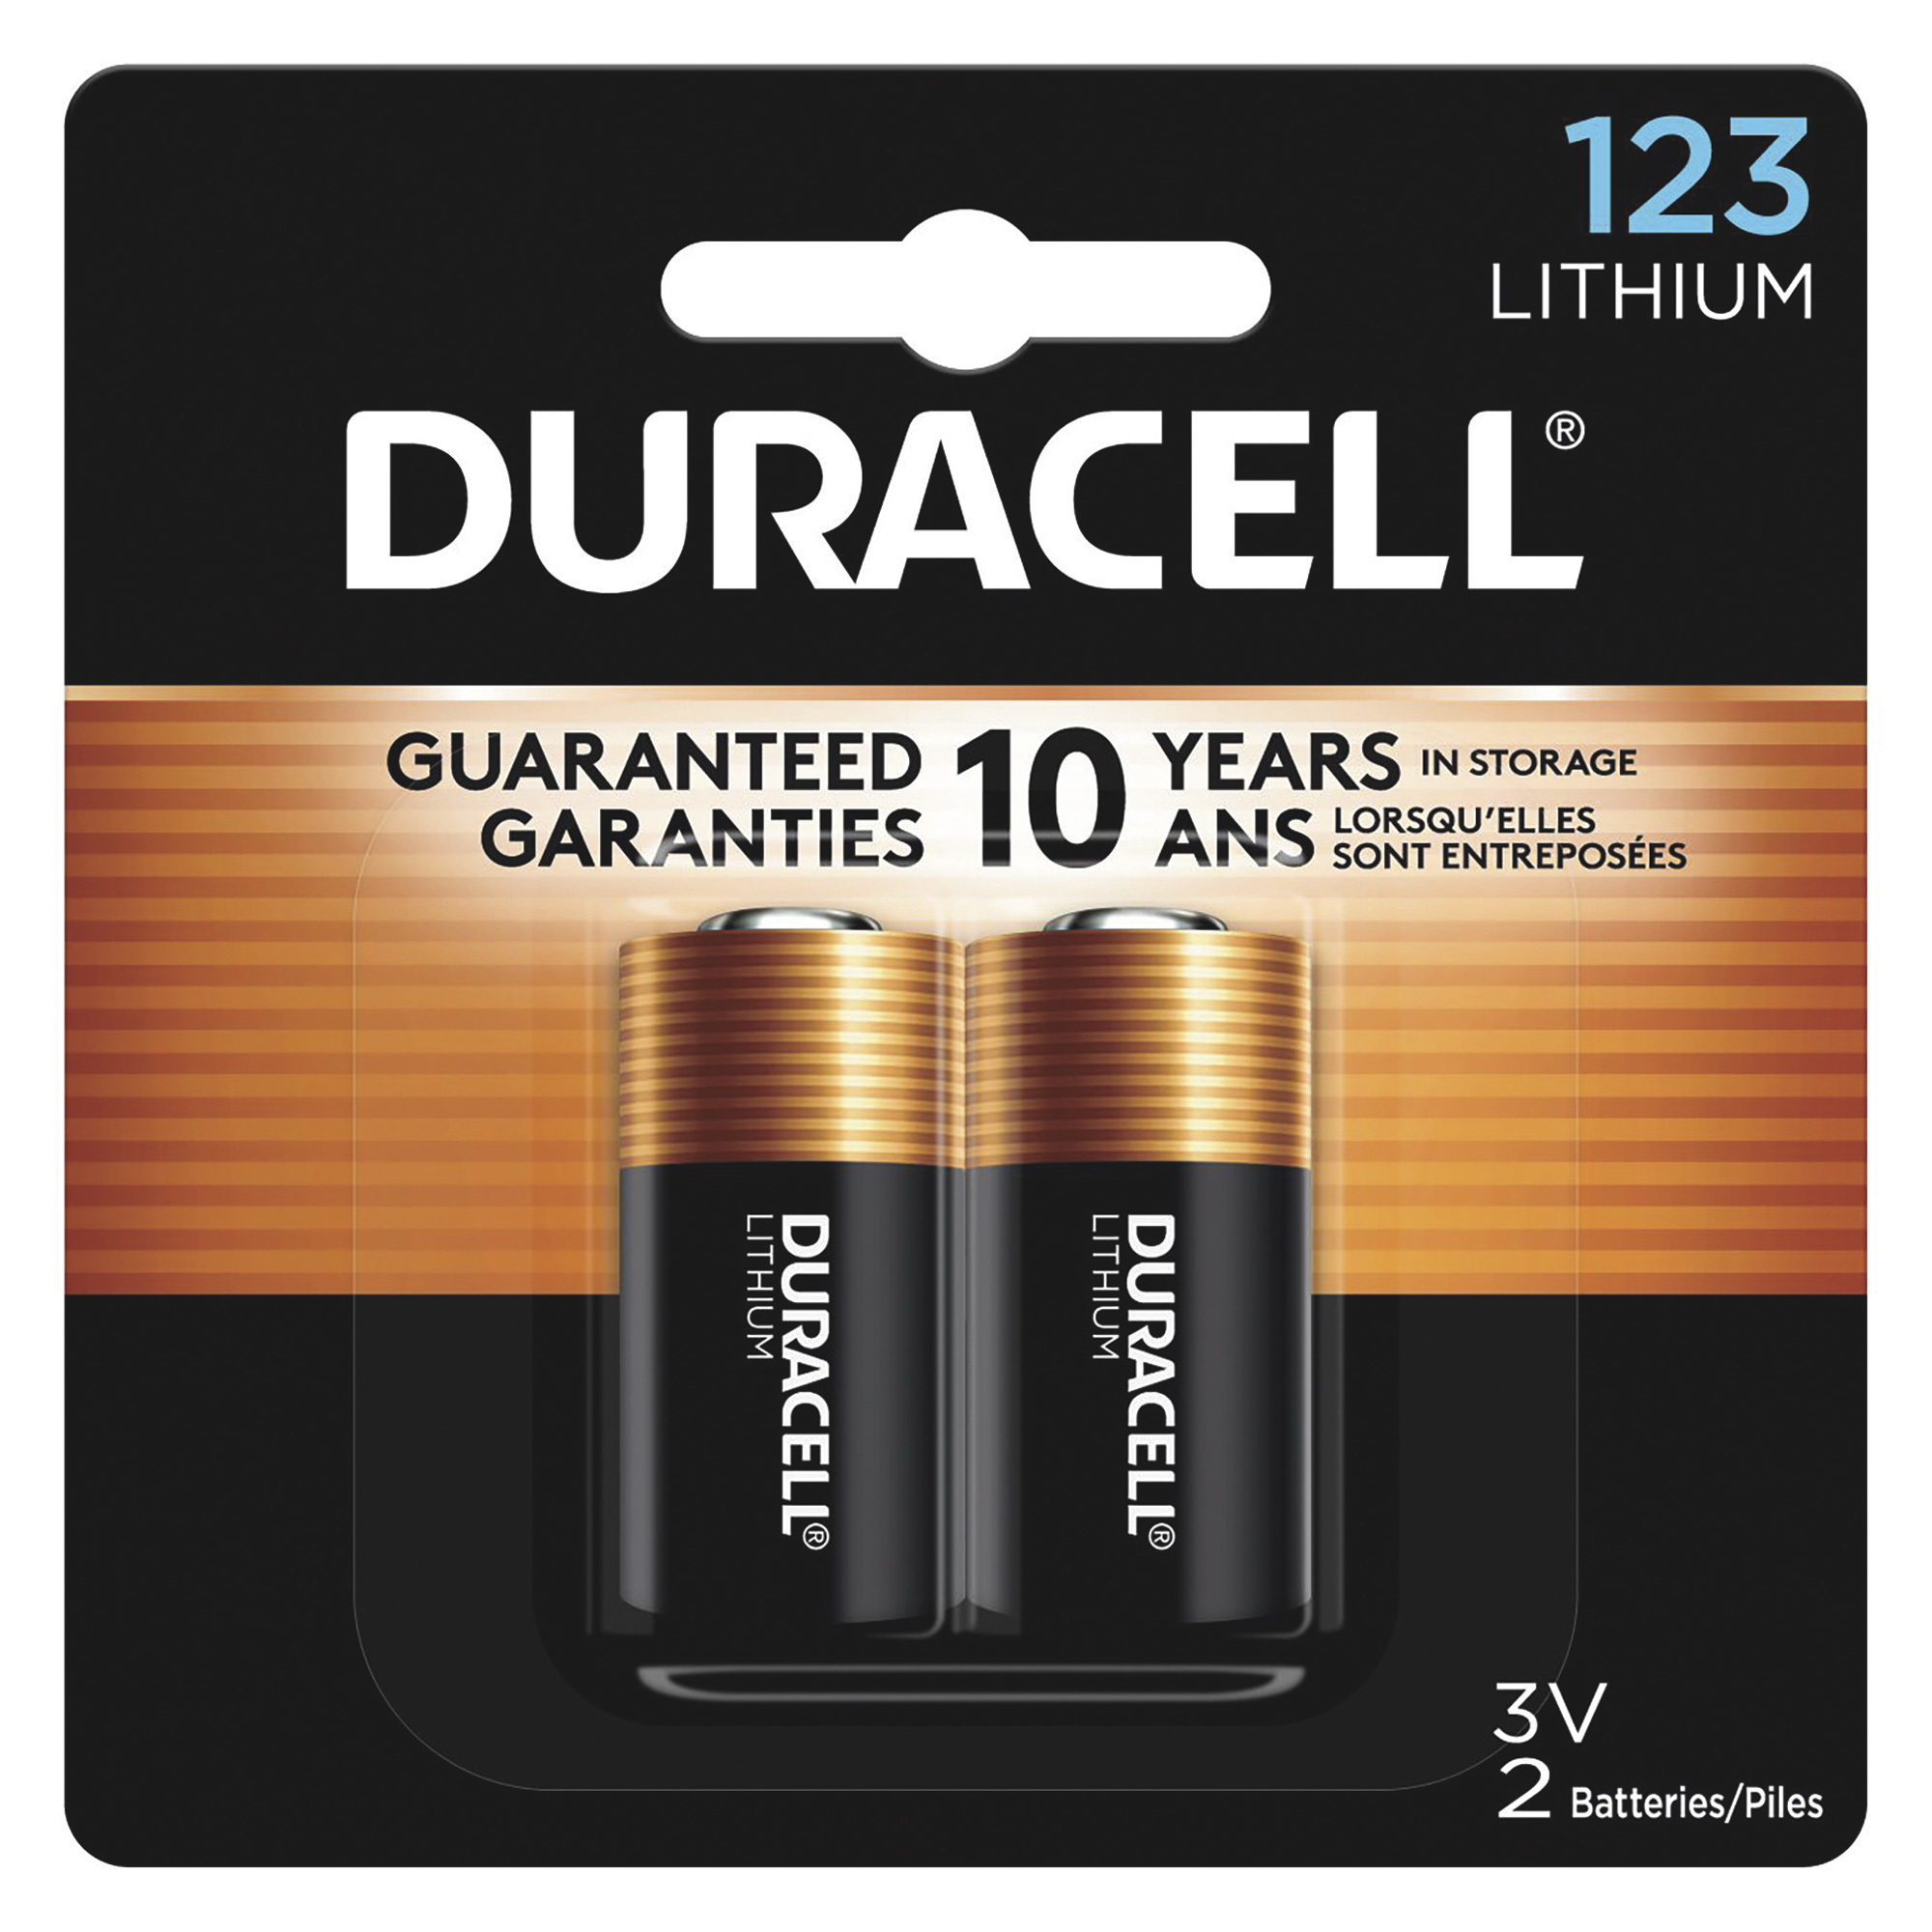 Duracell 123 Lithium Battery â 2-Pack, Model DURDL123AB2PK